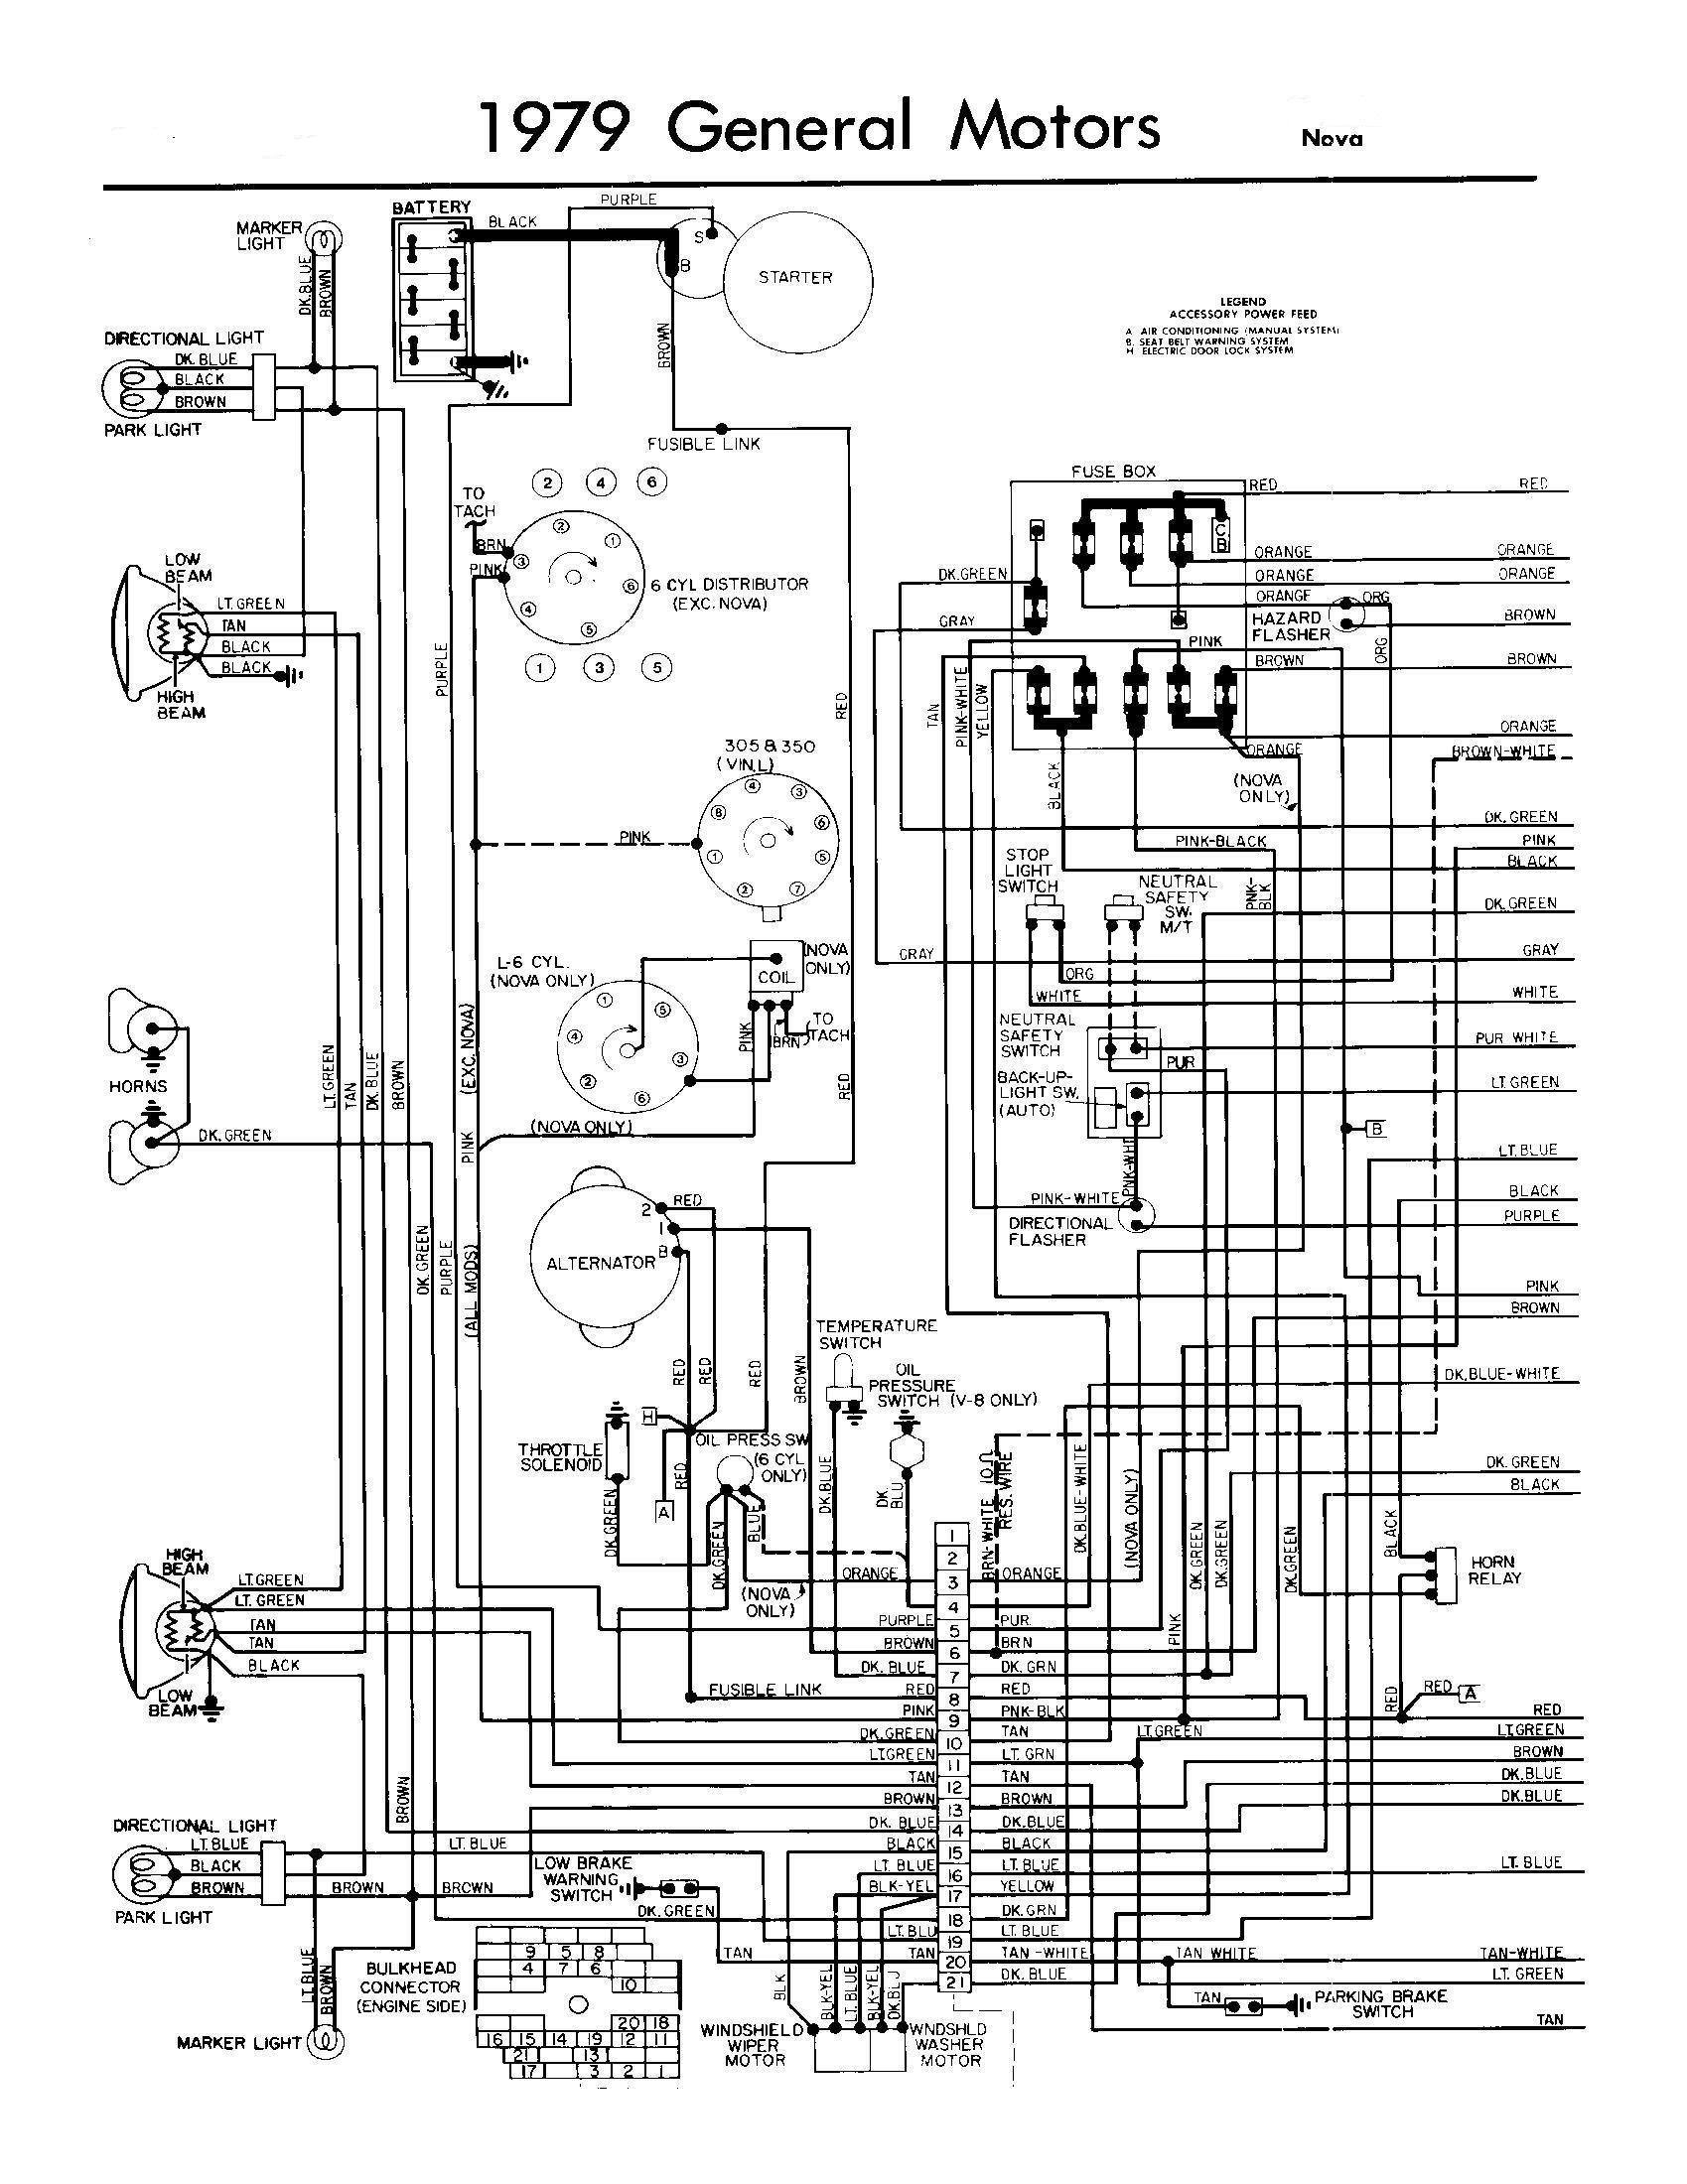 48 Volt Star Golf Cart Wiring Diagram | Wiring Library - Club Car Wiring Diagram 48 Volt